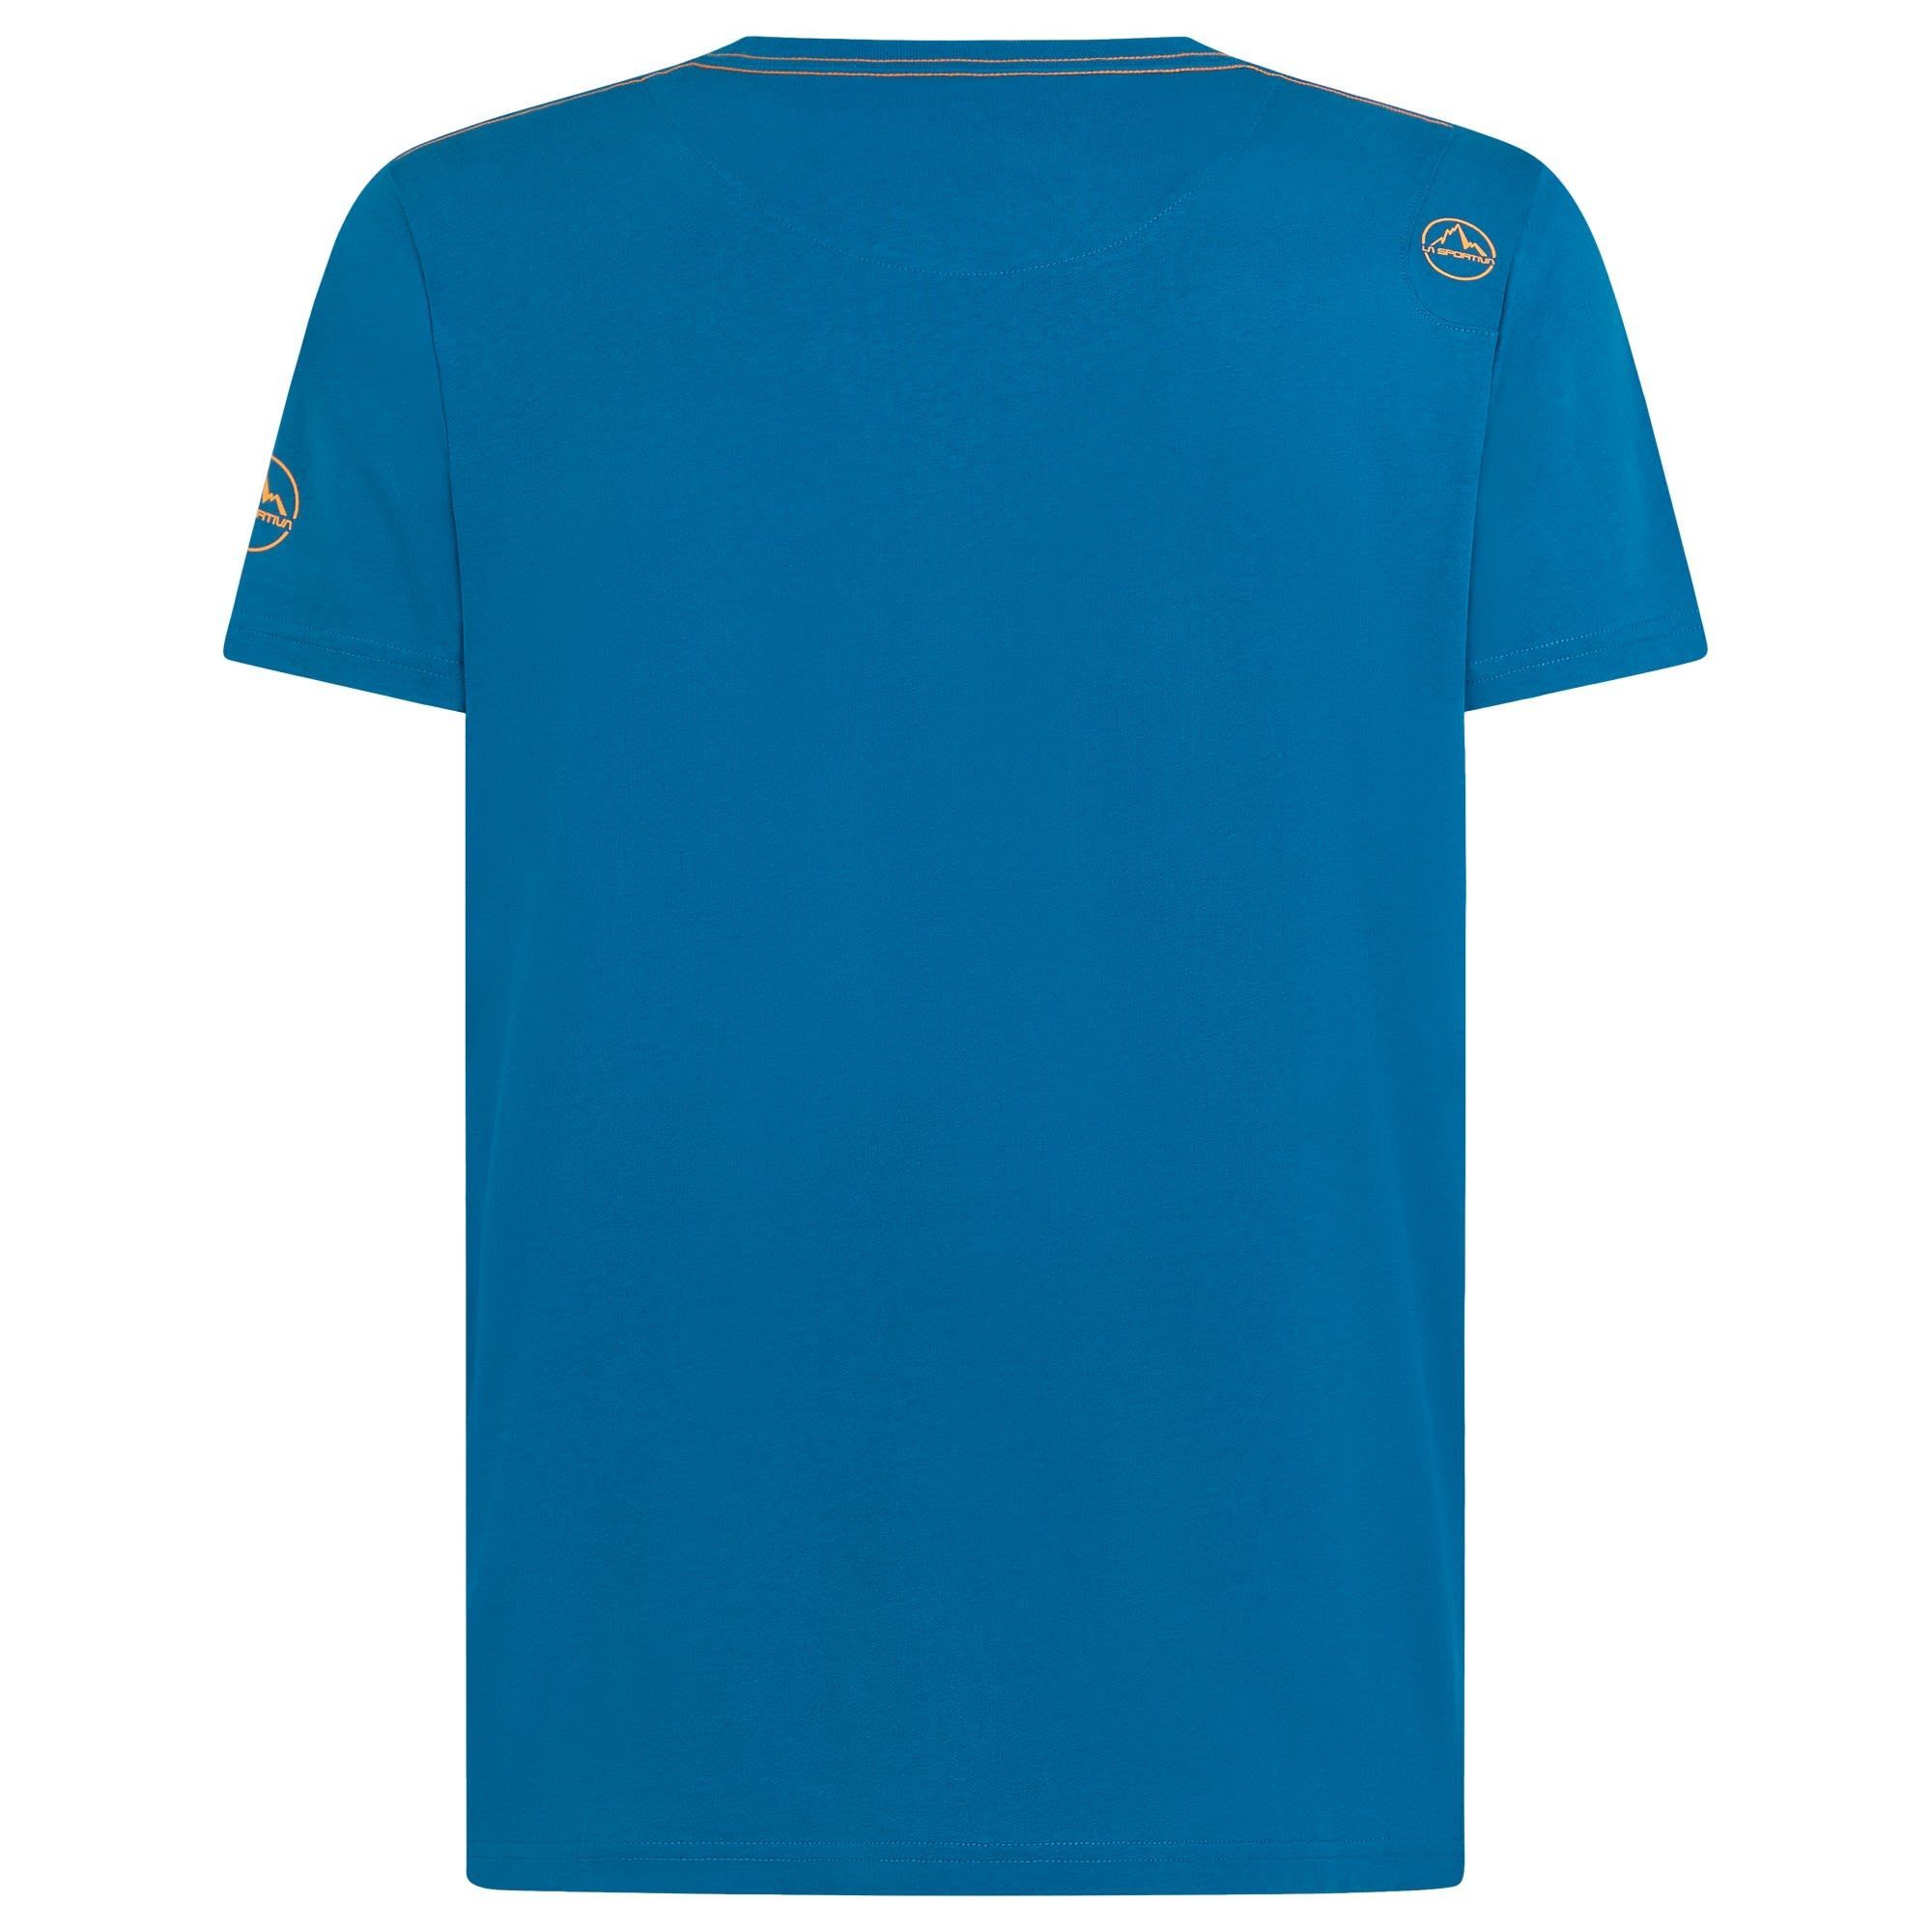 La La M Kurzarm-Shirt Herren Blue T-shirt Theory Sportiva - Space Sportiva Topaz T-Shirt